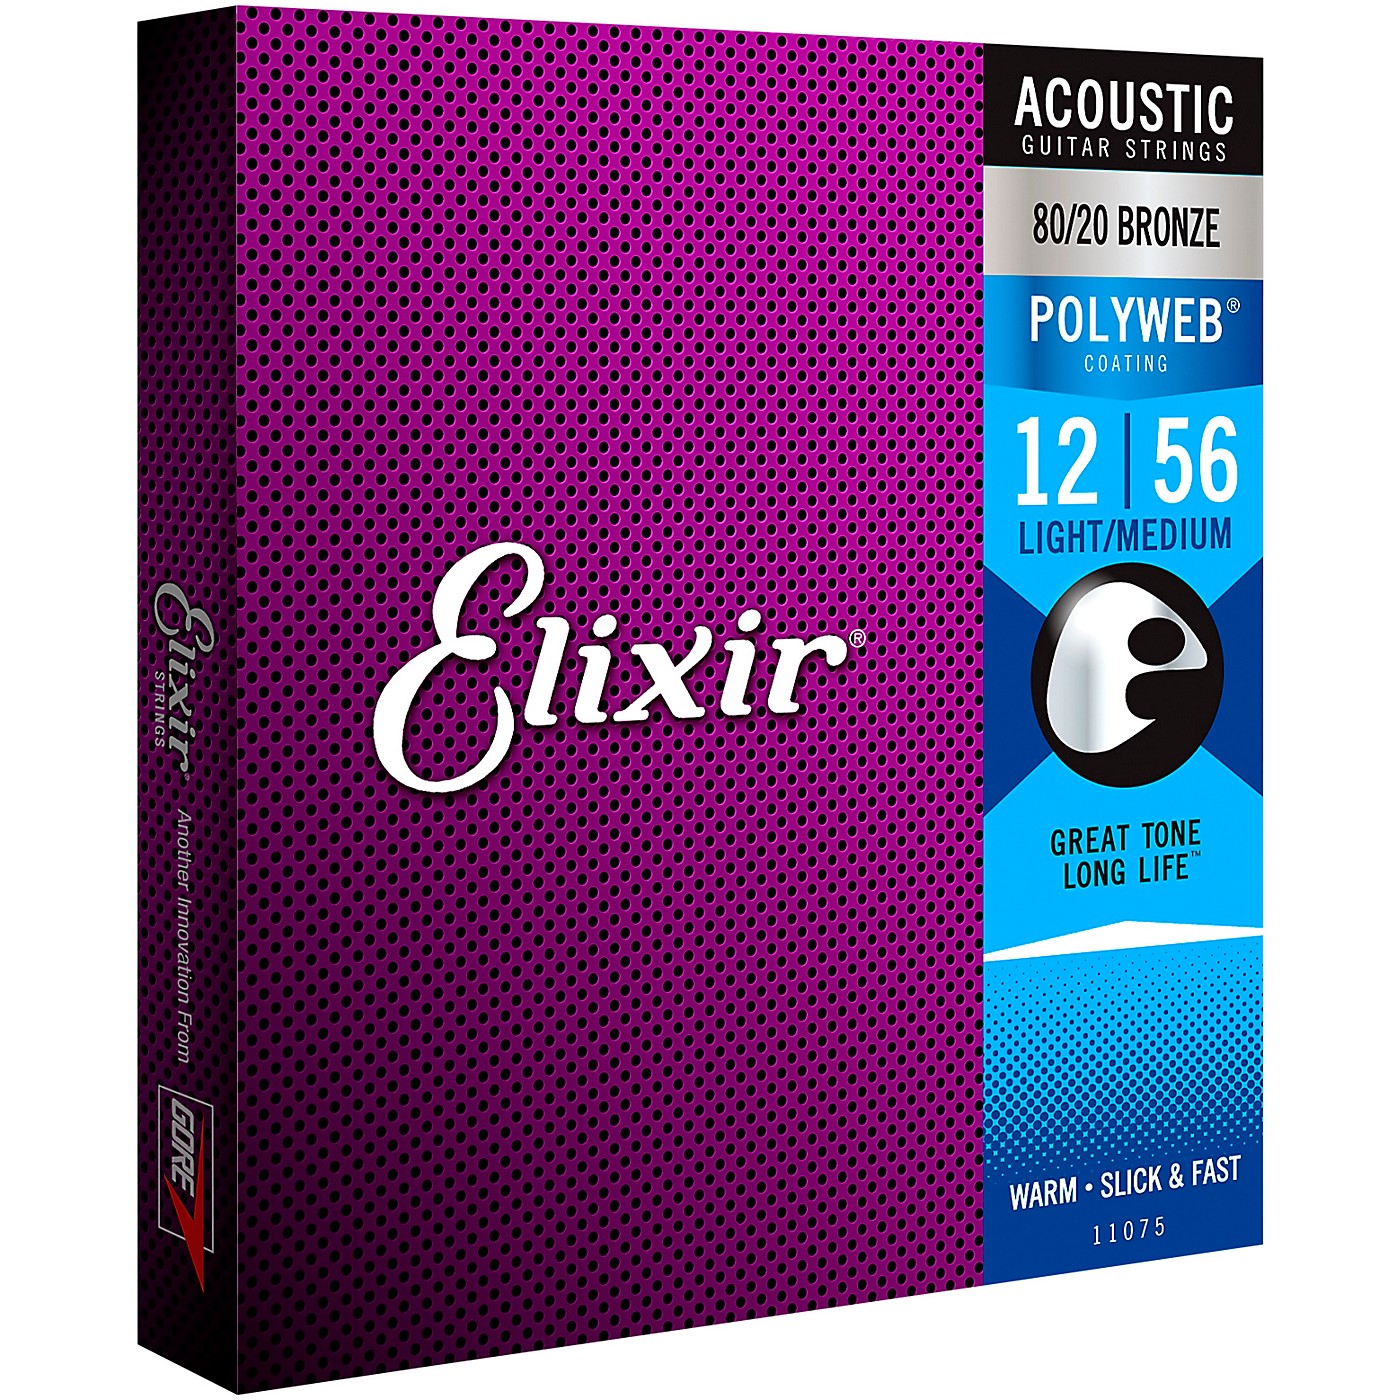 Elixir 80/20 Bronze Acoustic Guitar Strings with POLYWEB Coating, Light/Medium (.012-.056) thumbnail